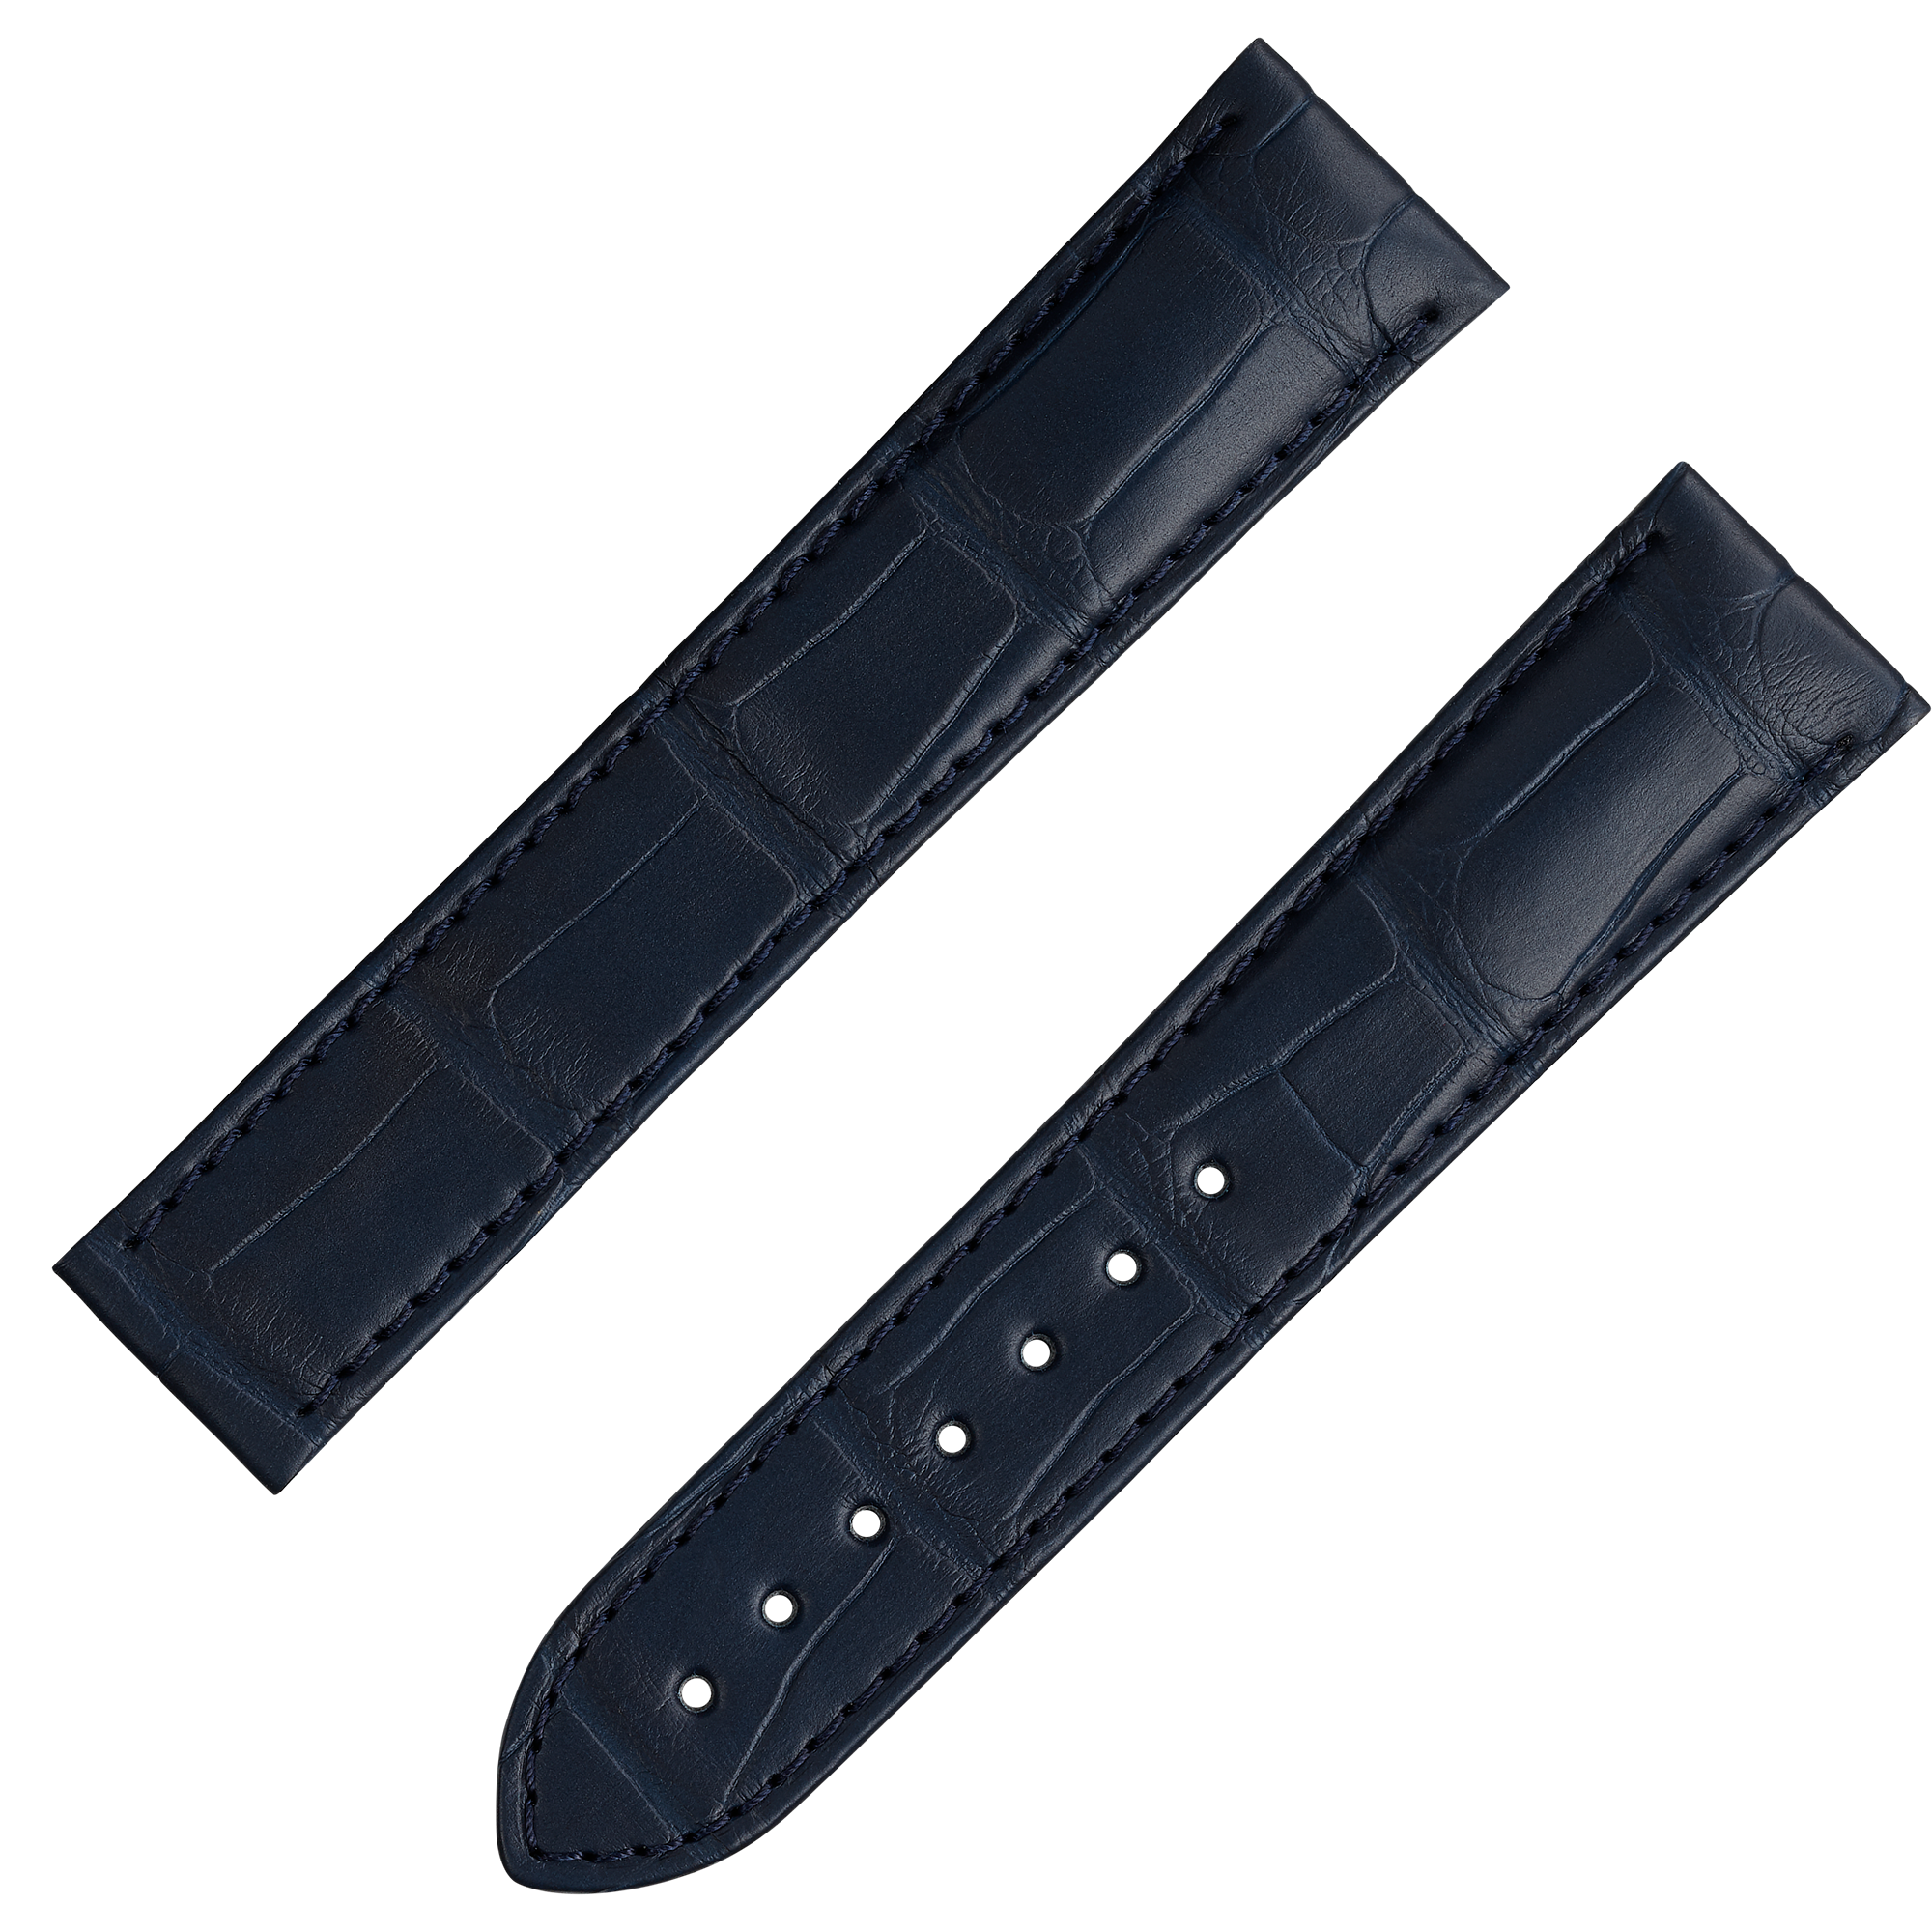 Watch Straps Dark blue alligator leather strap with foldover clasp